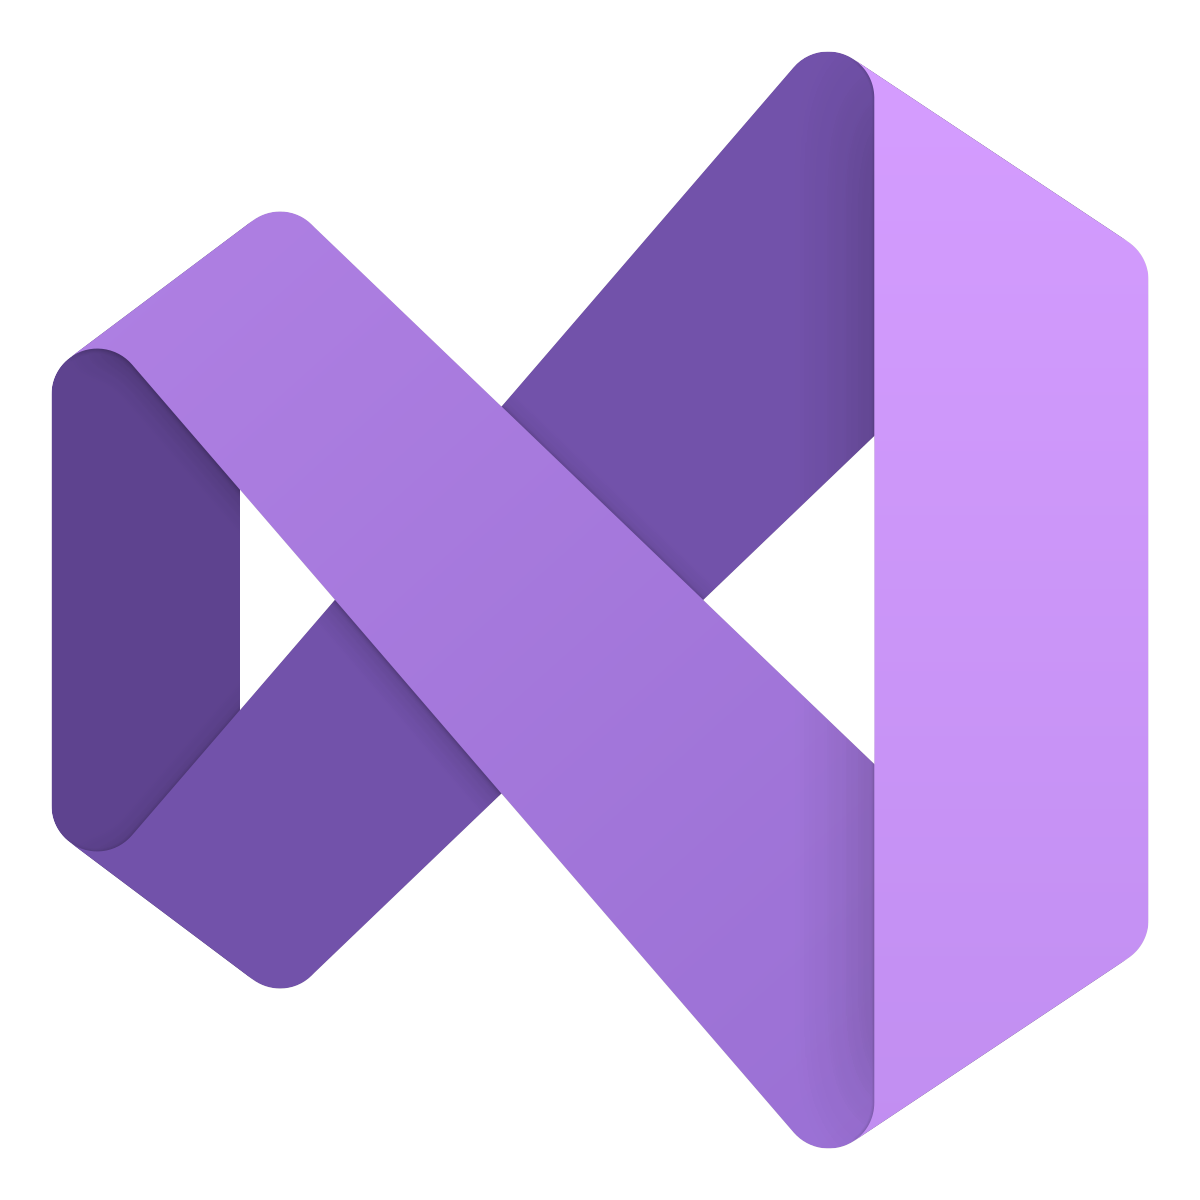 File:Typescript logo 2020.svg - Wikimedia Commons